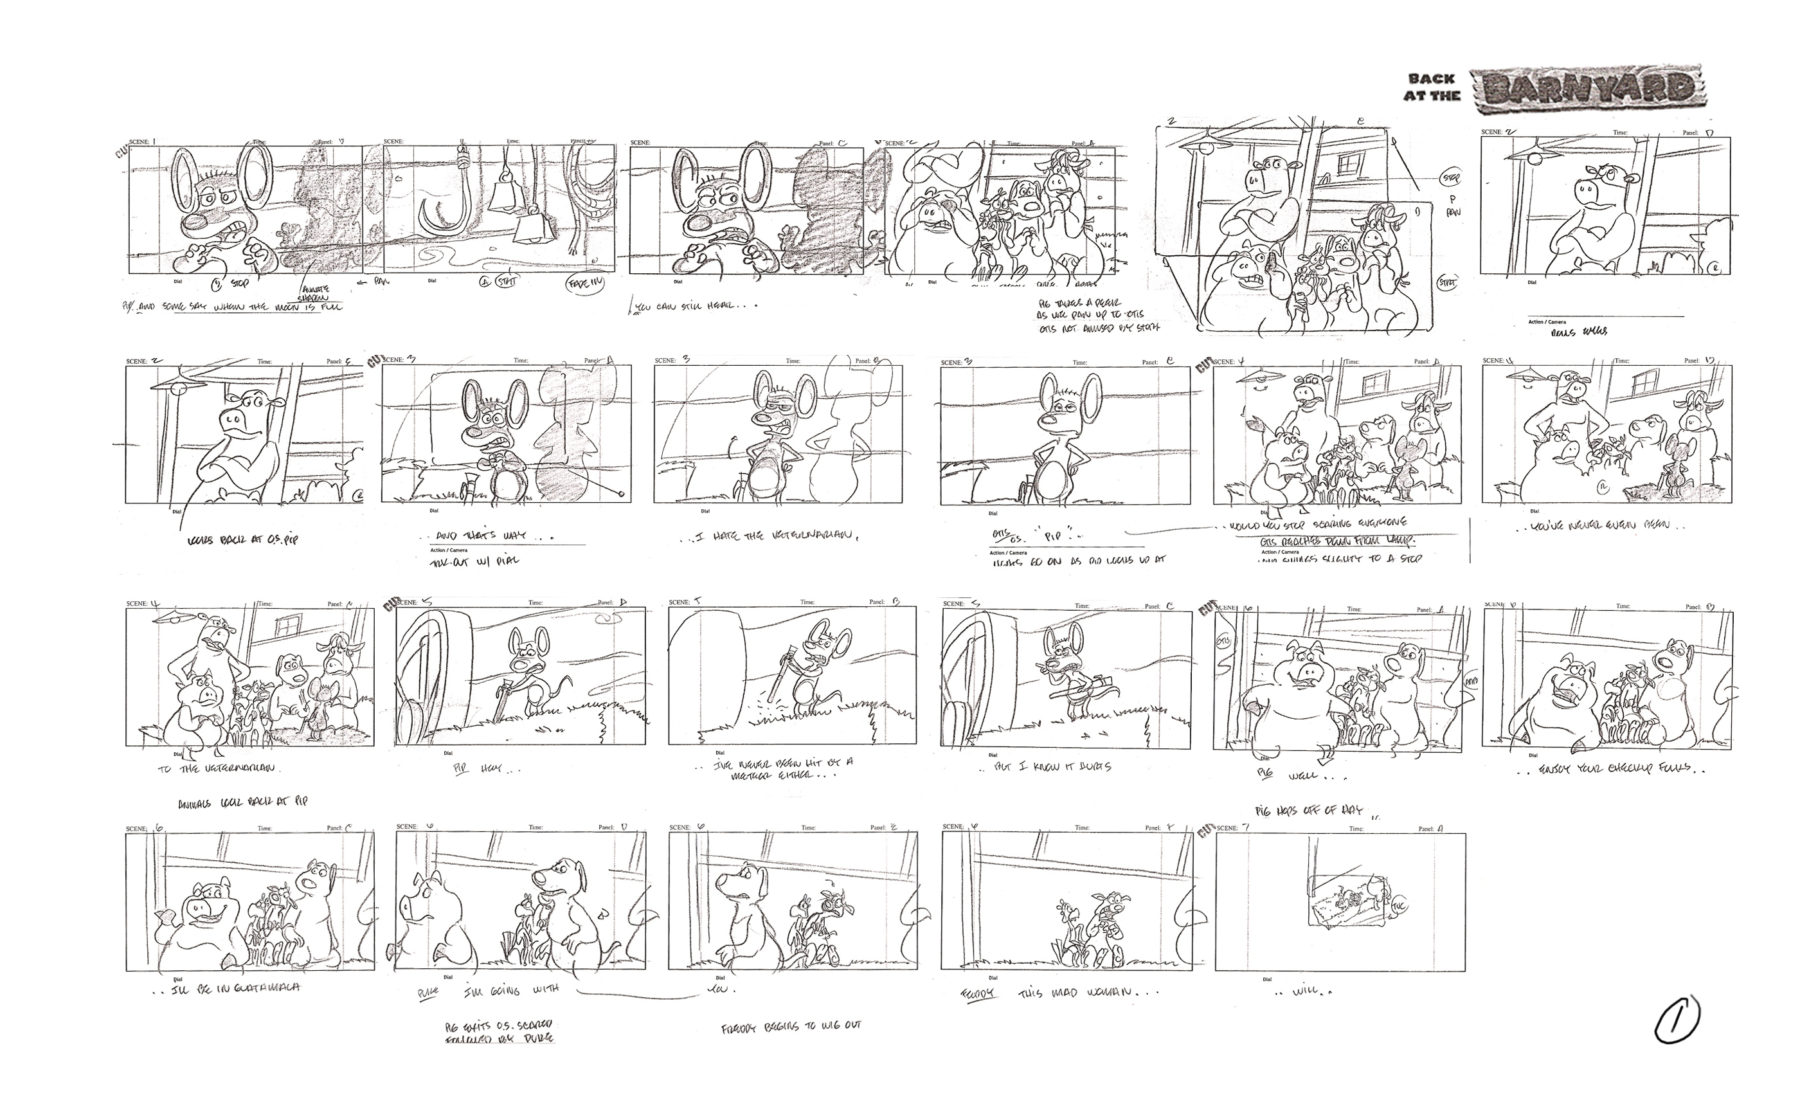 Bert Ring's storyboards for Back at the Barnyard, Nickelodeon